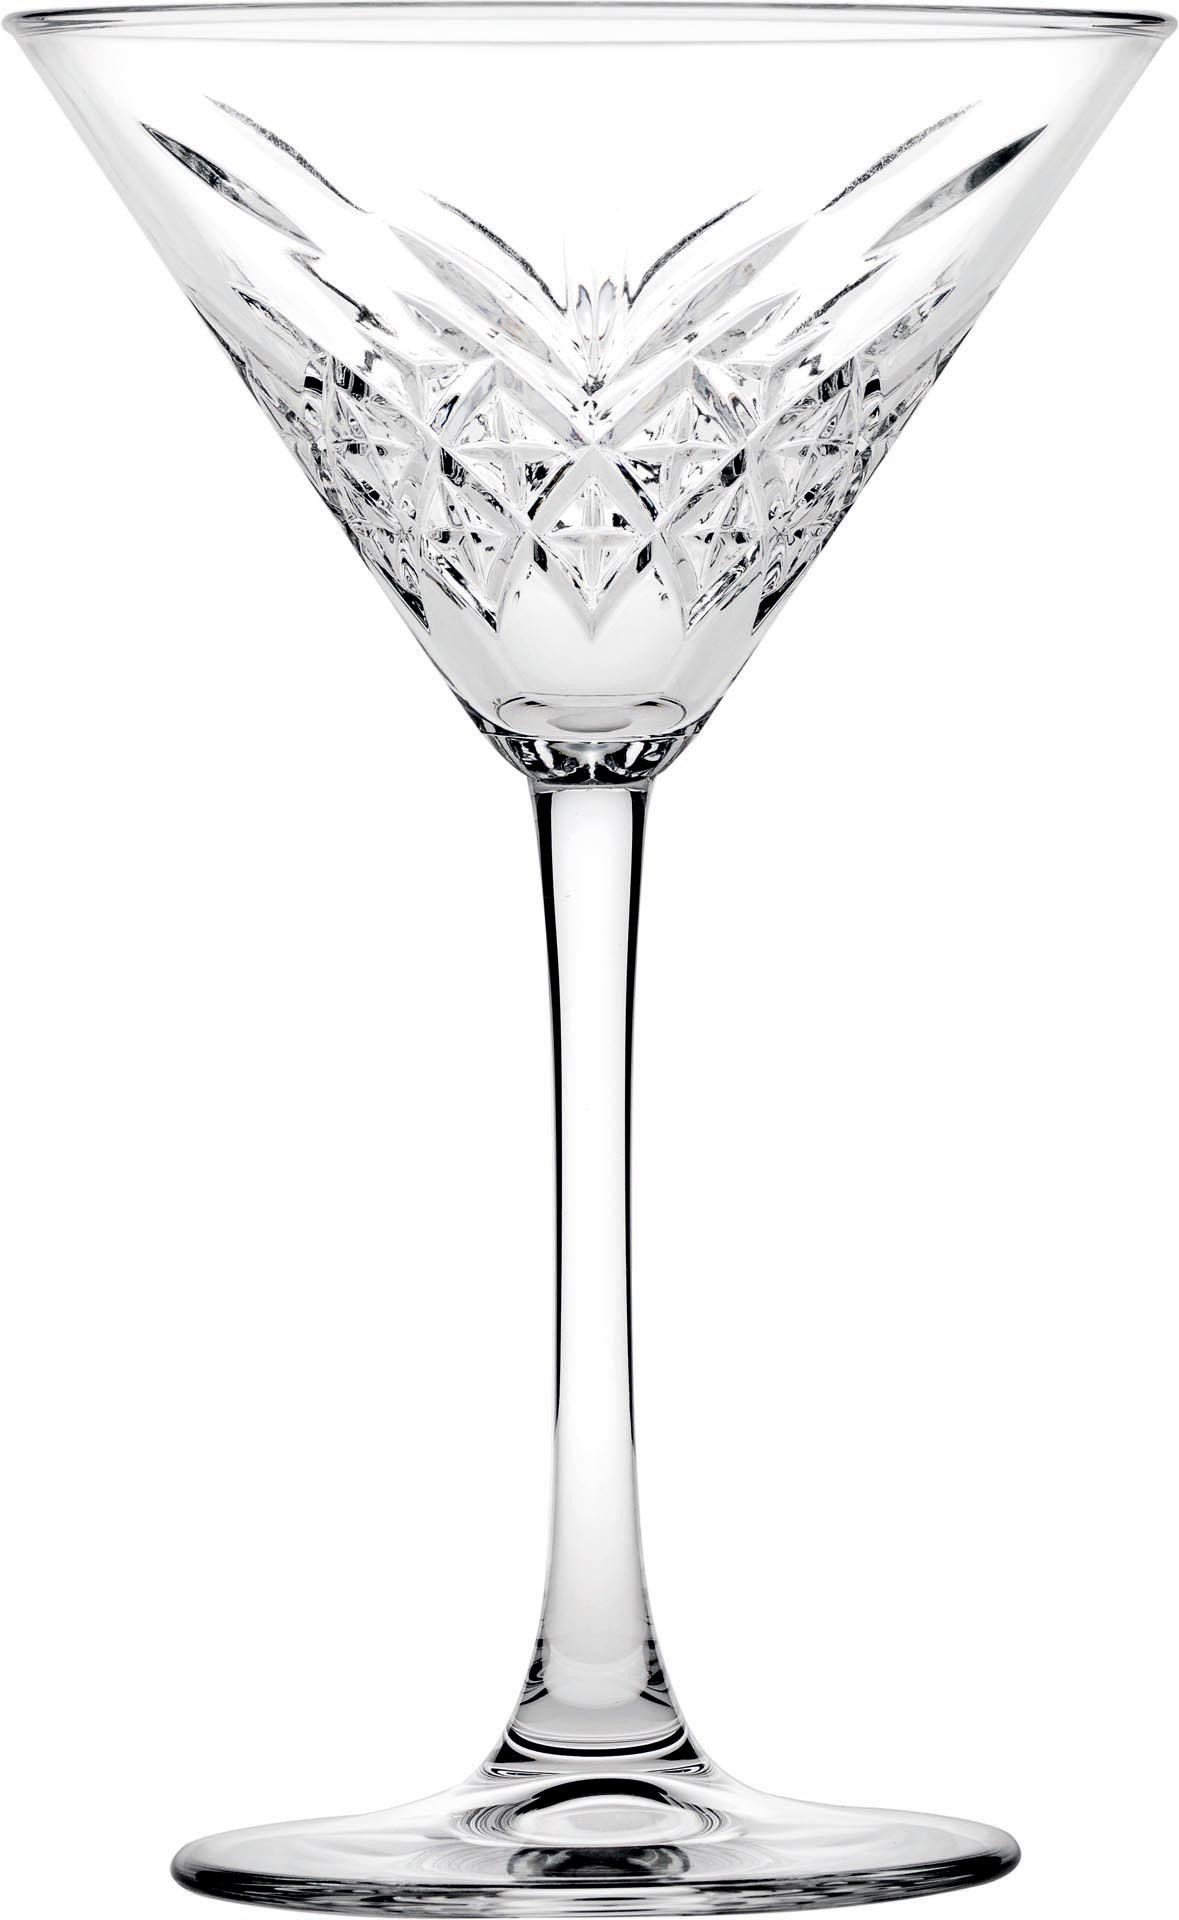 Martiniglas "Timeless" 23 cl